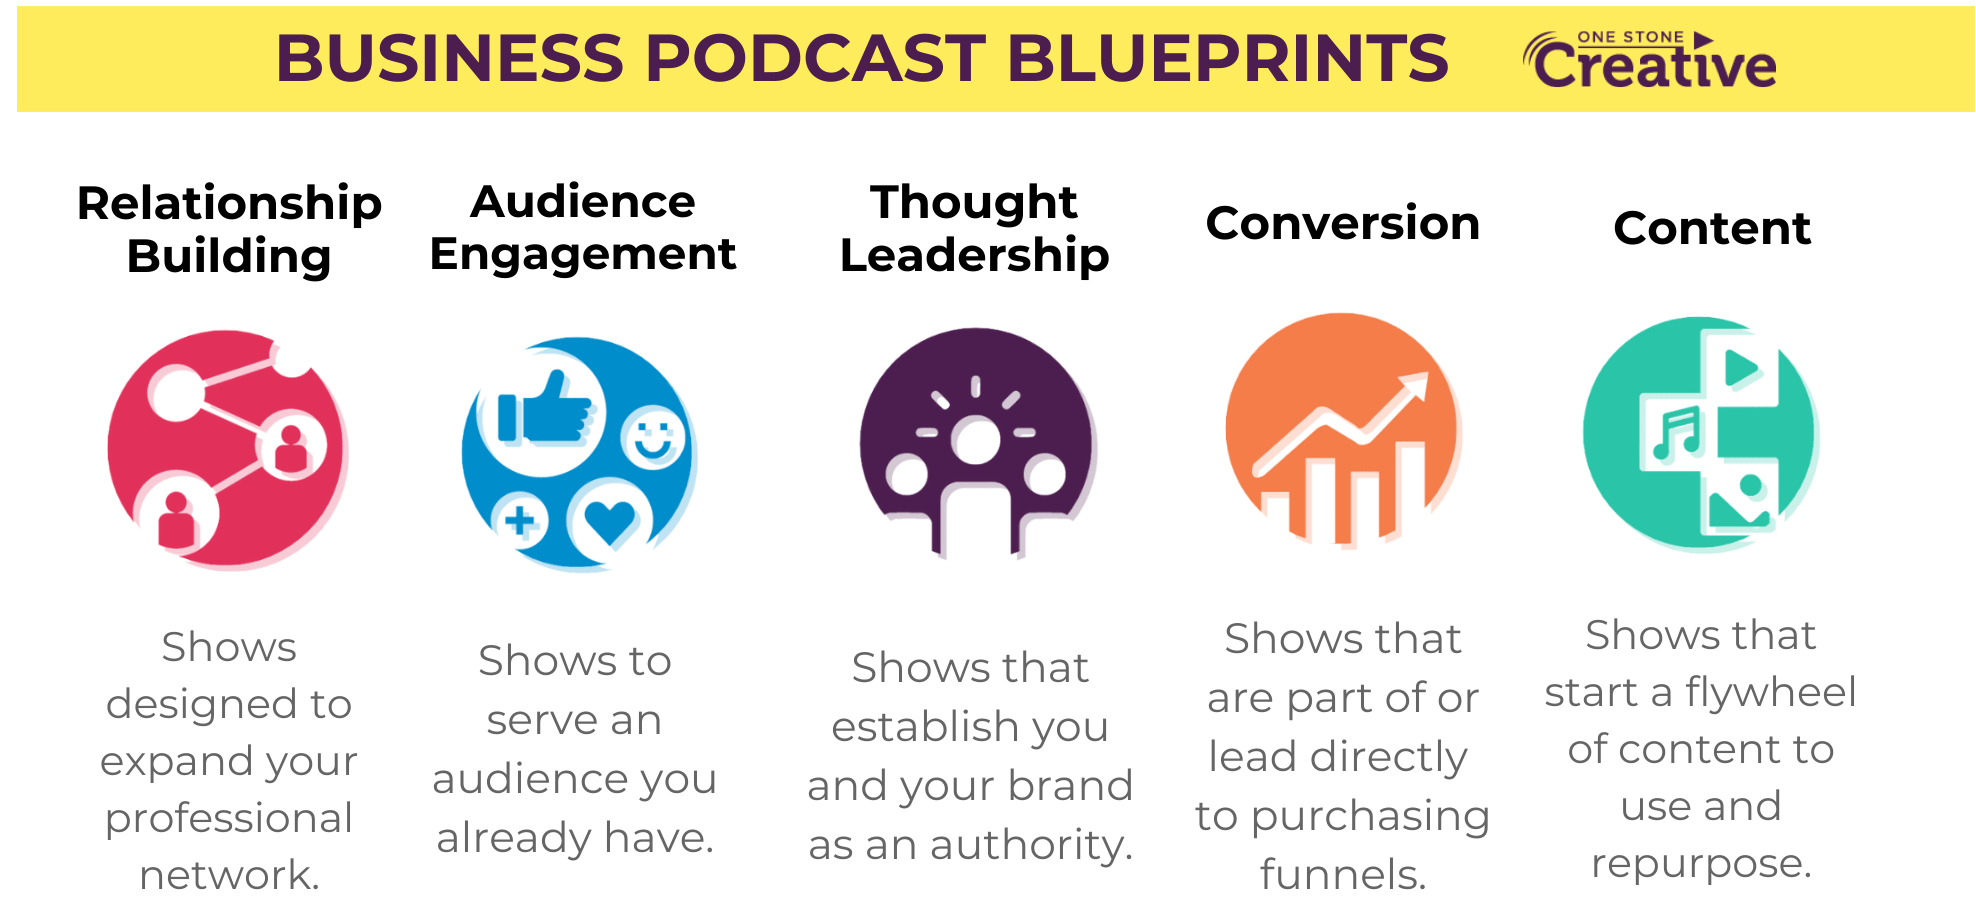 5 business podcast blueprints